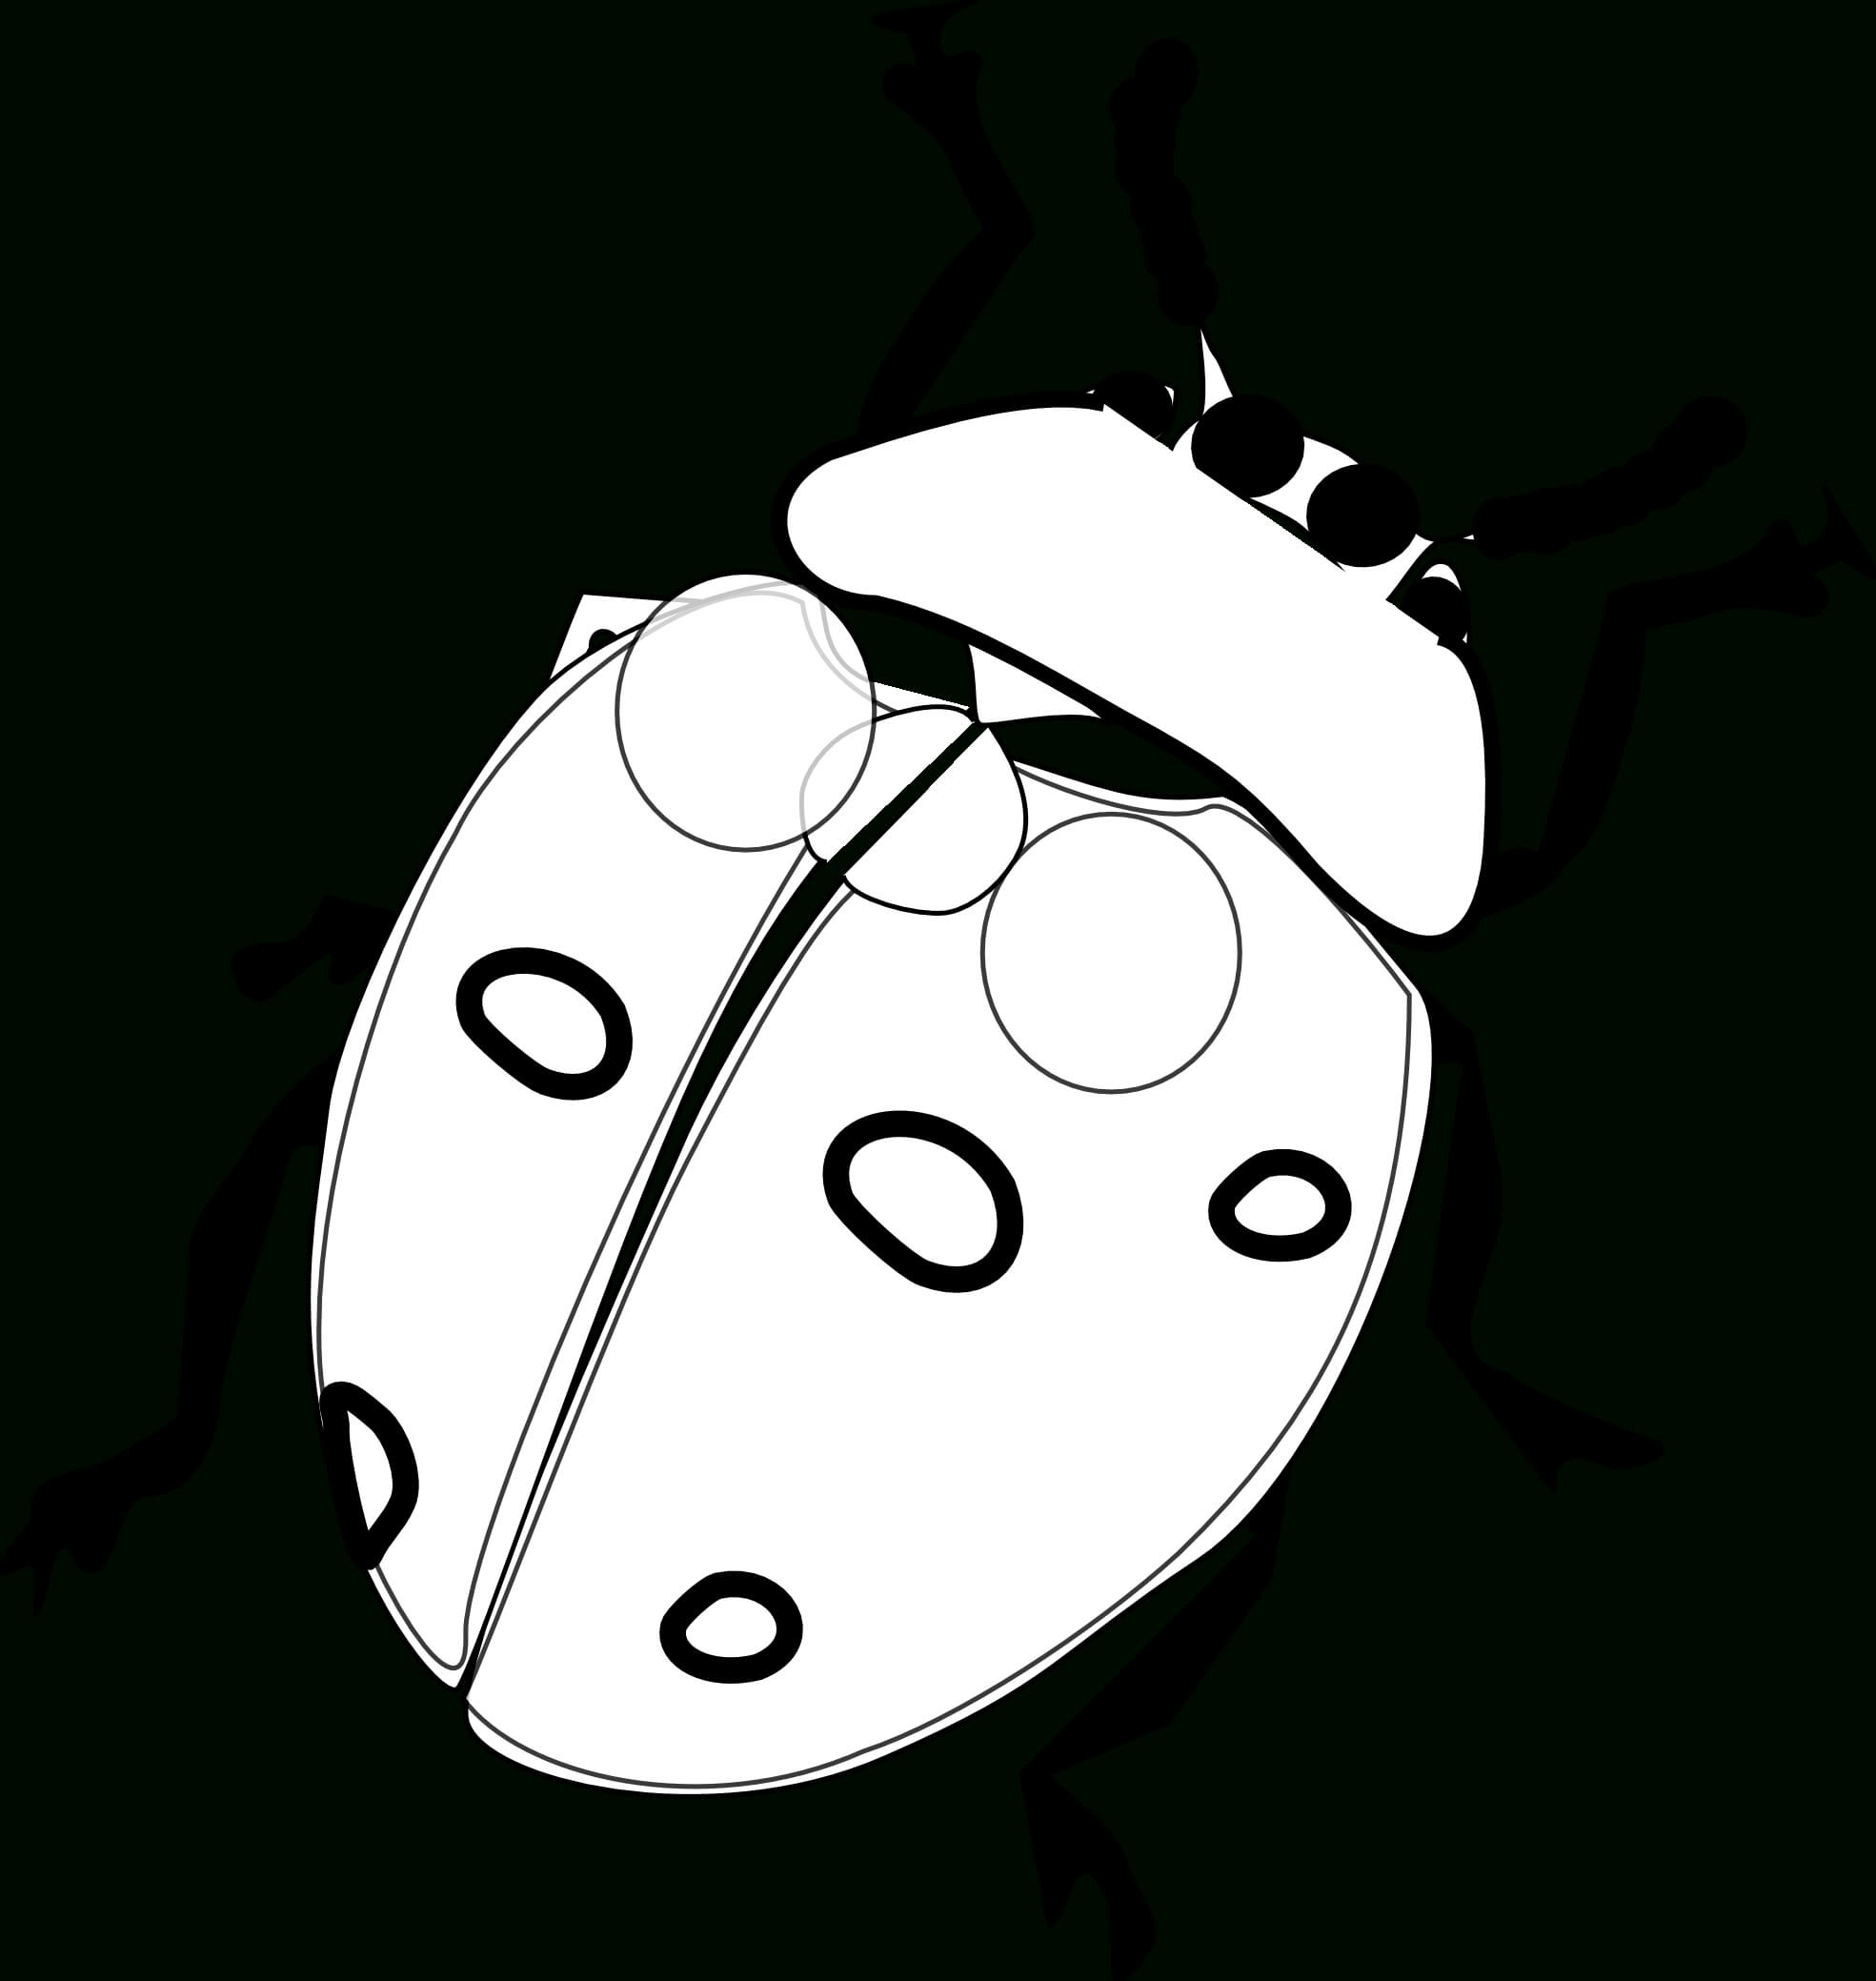 Drawing Ladybug Blank, Picture #2224421 Drawing Ladybug Blank With Regard To Blank Ladybug Template